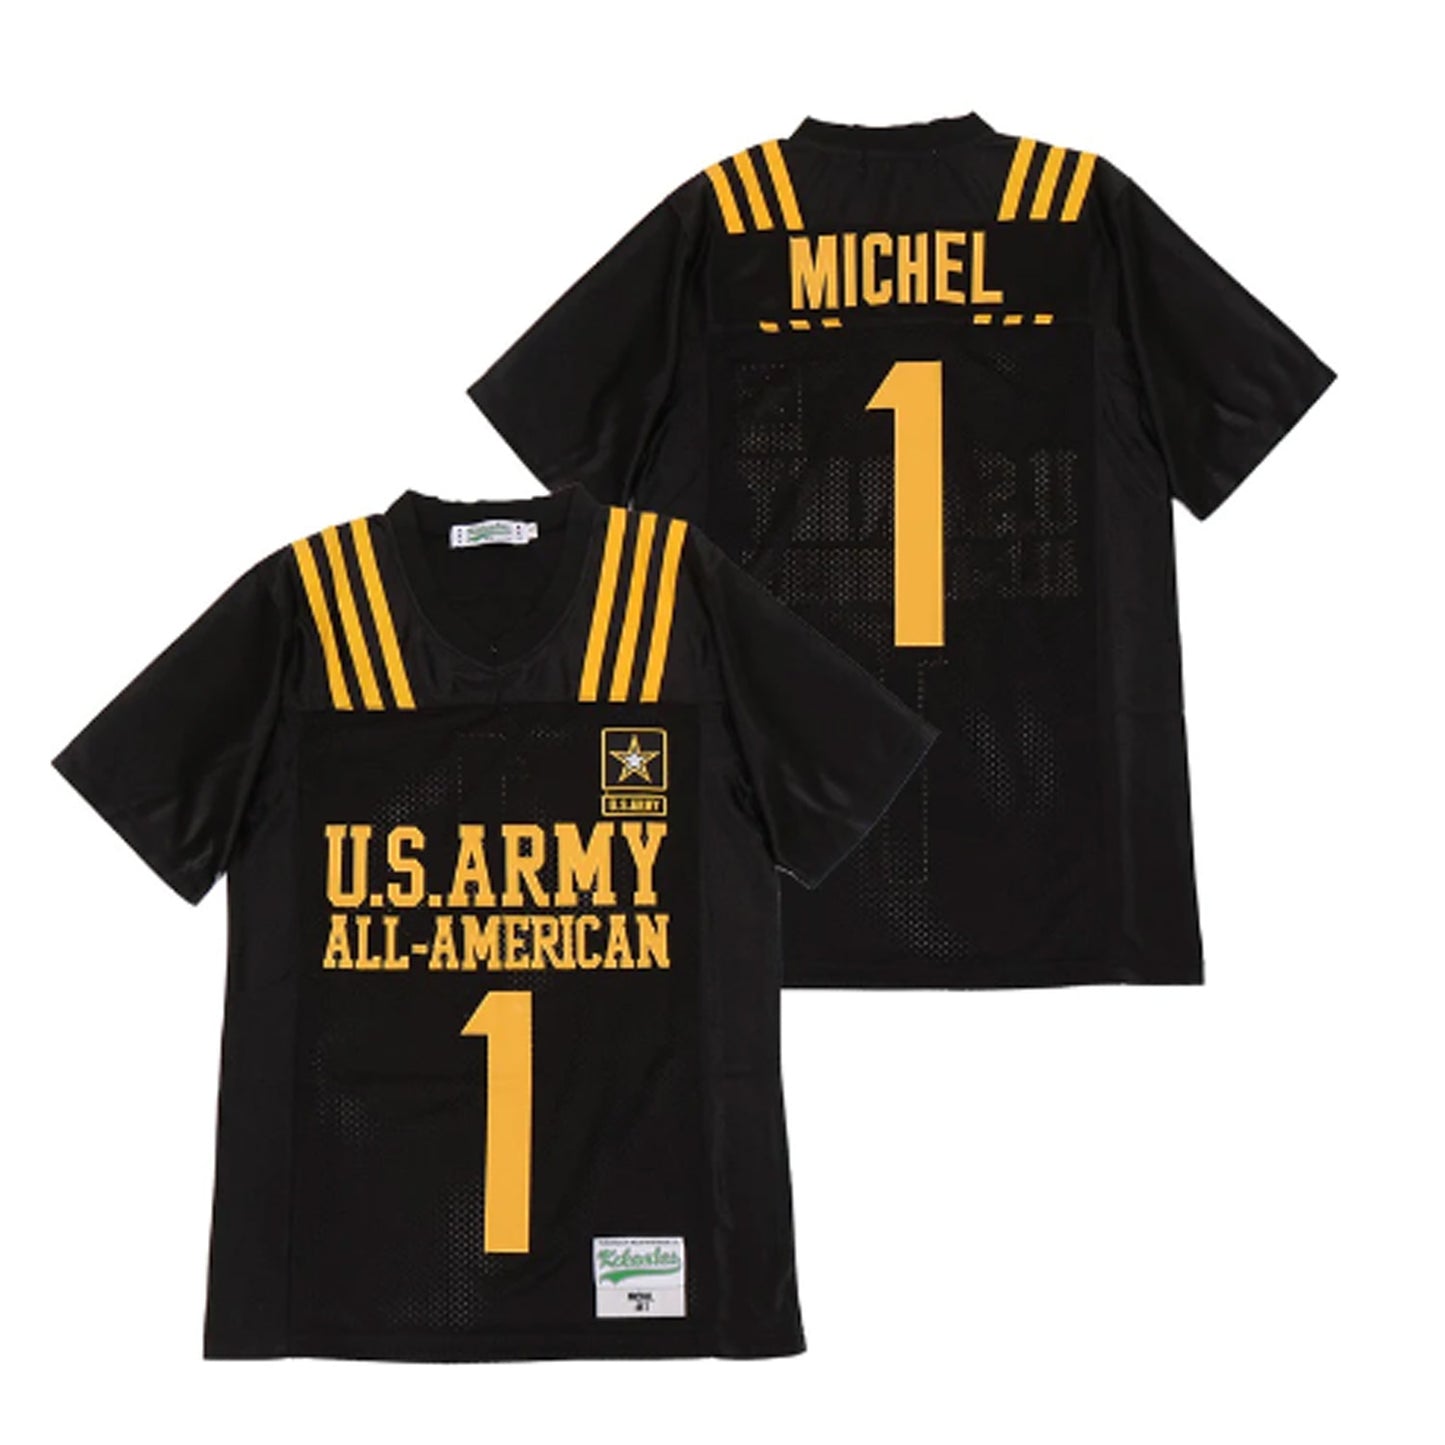 Sony Michel U.S. Army All-American Football 1 Jersey